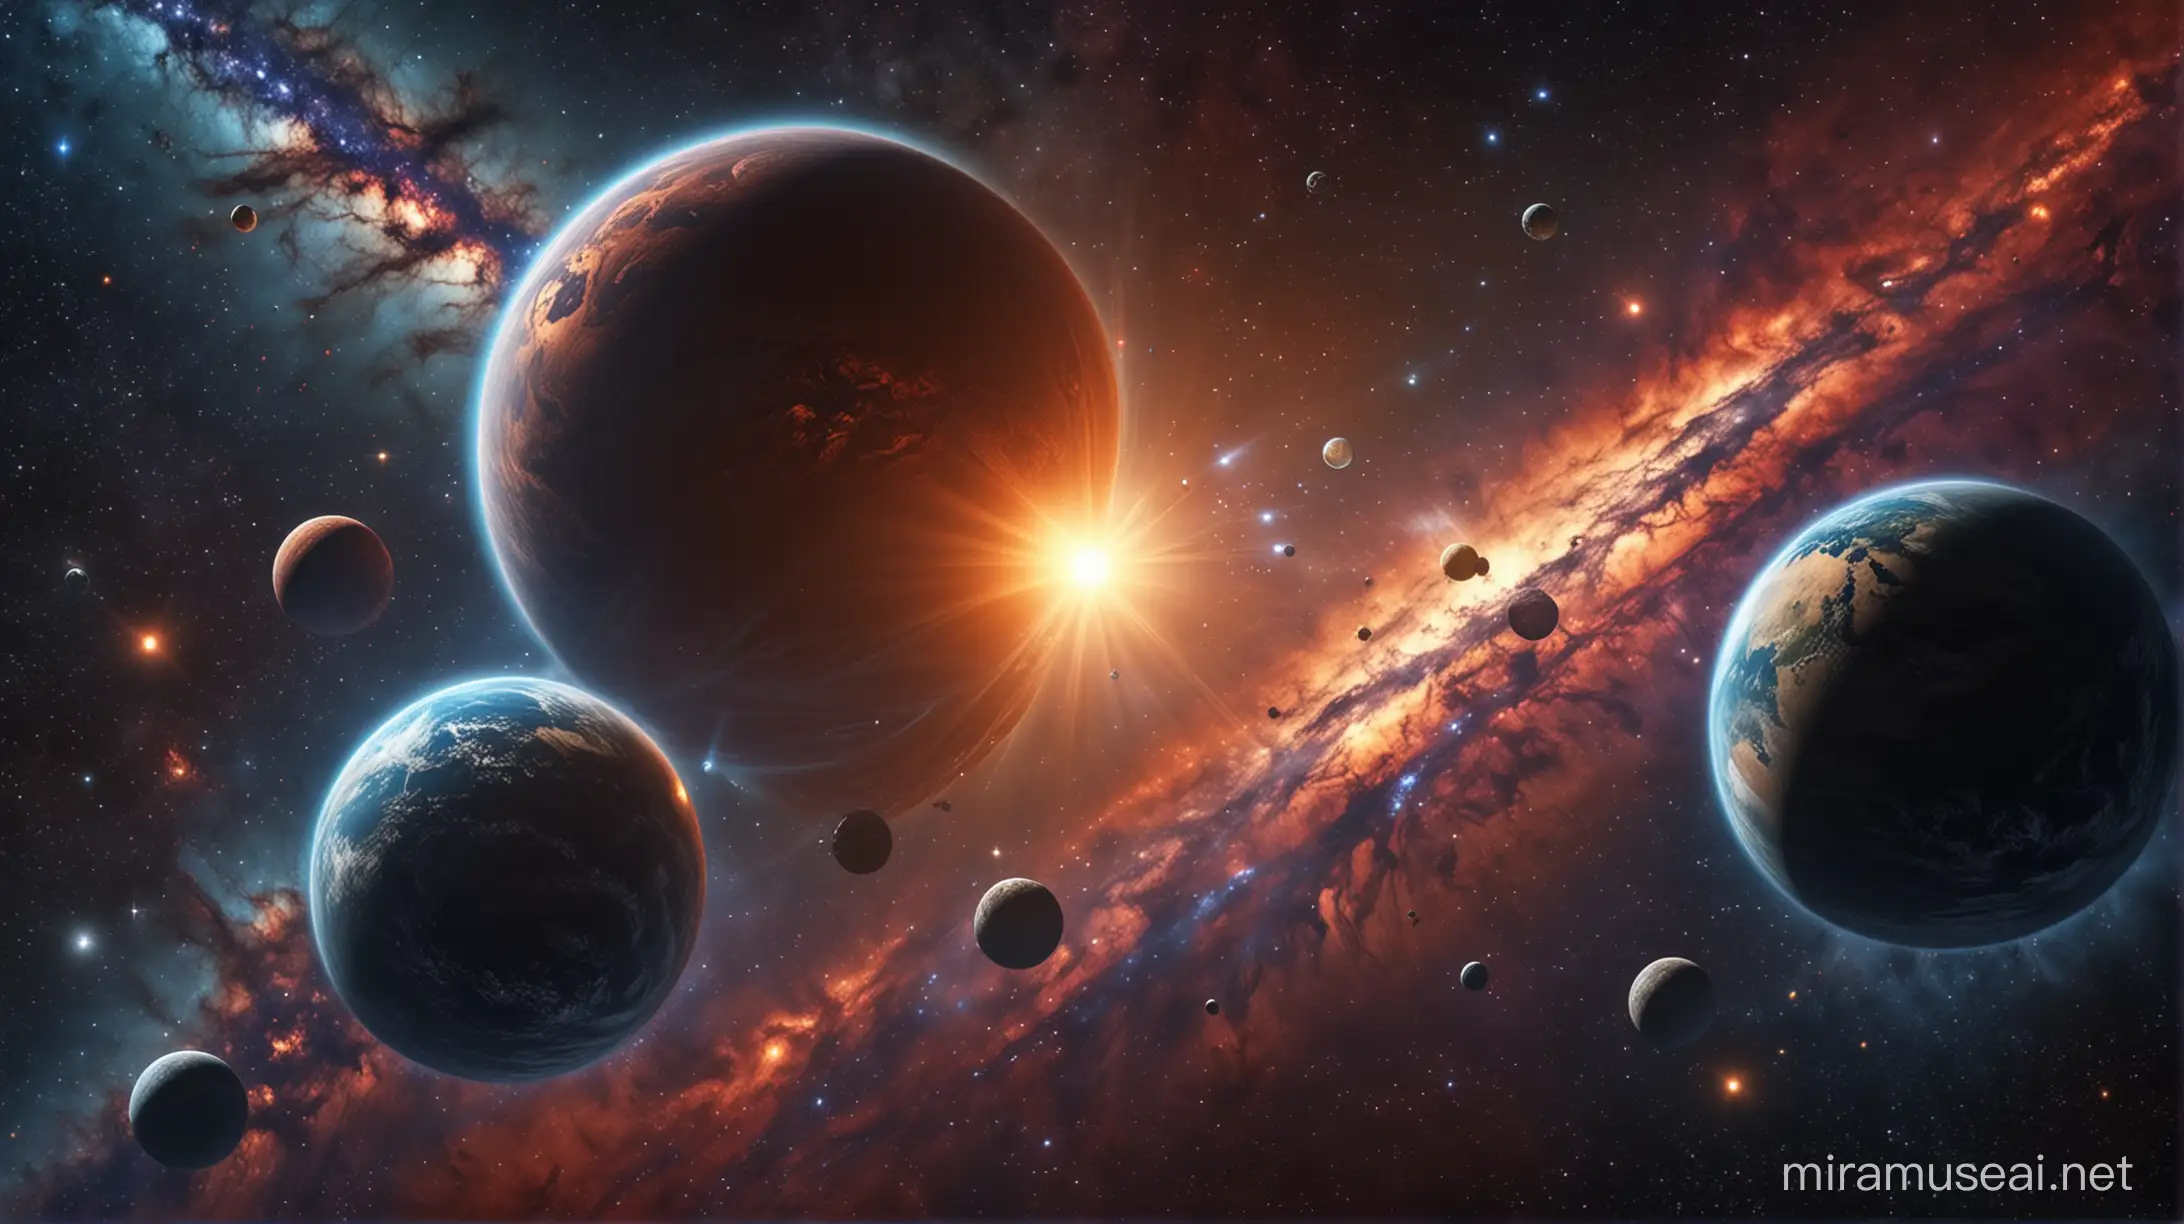 Beautiful EarthLike Exoplanets in Cosmic Splendor